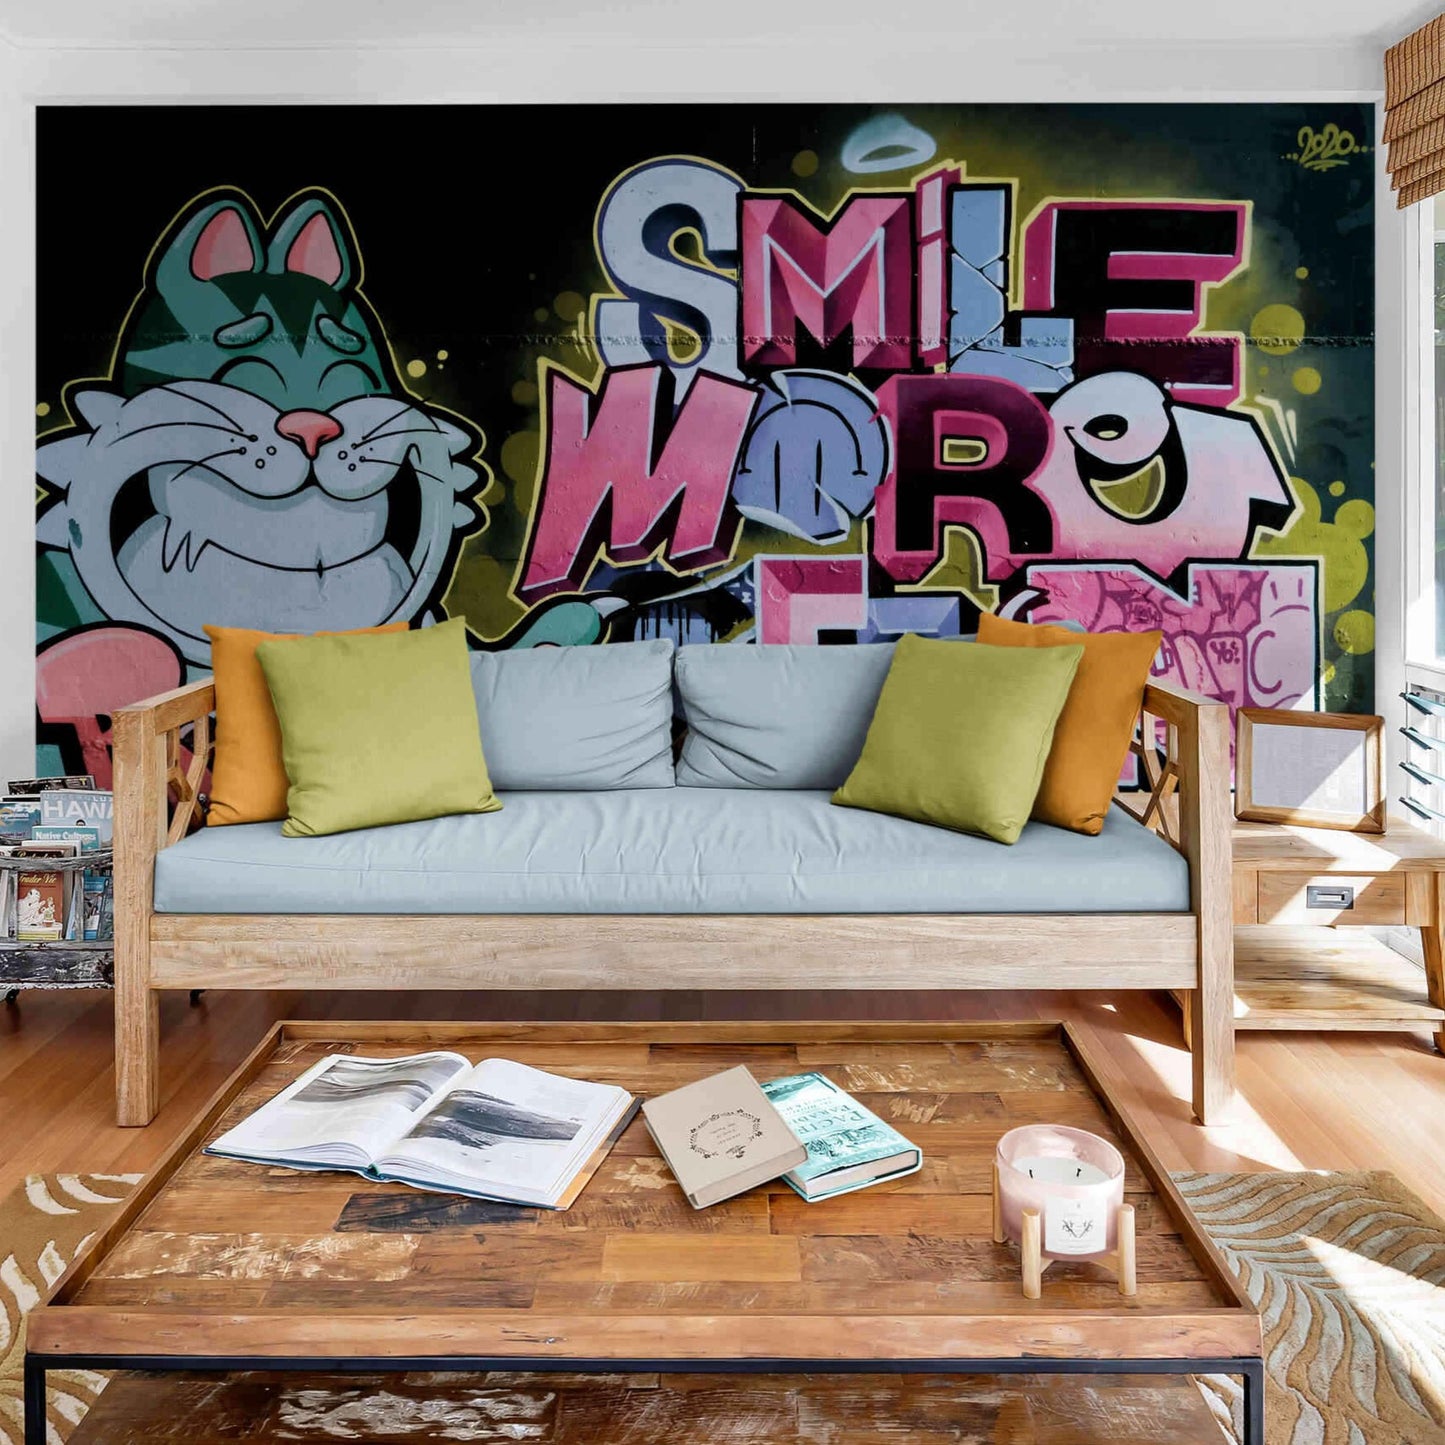 Magical creatures in vibrant cartoon graffiti wallpaper for a girl's bedroom.